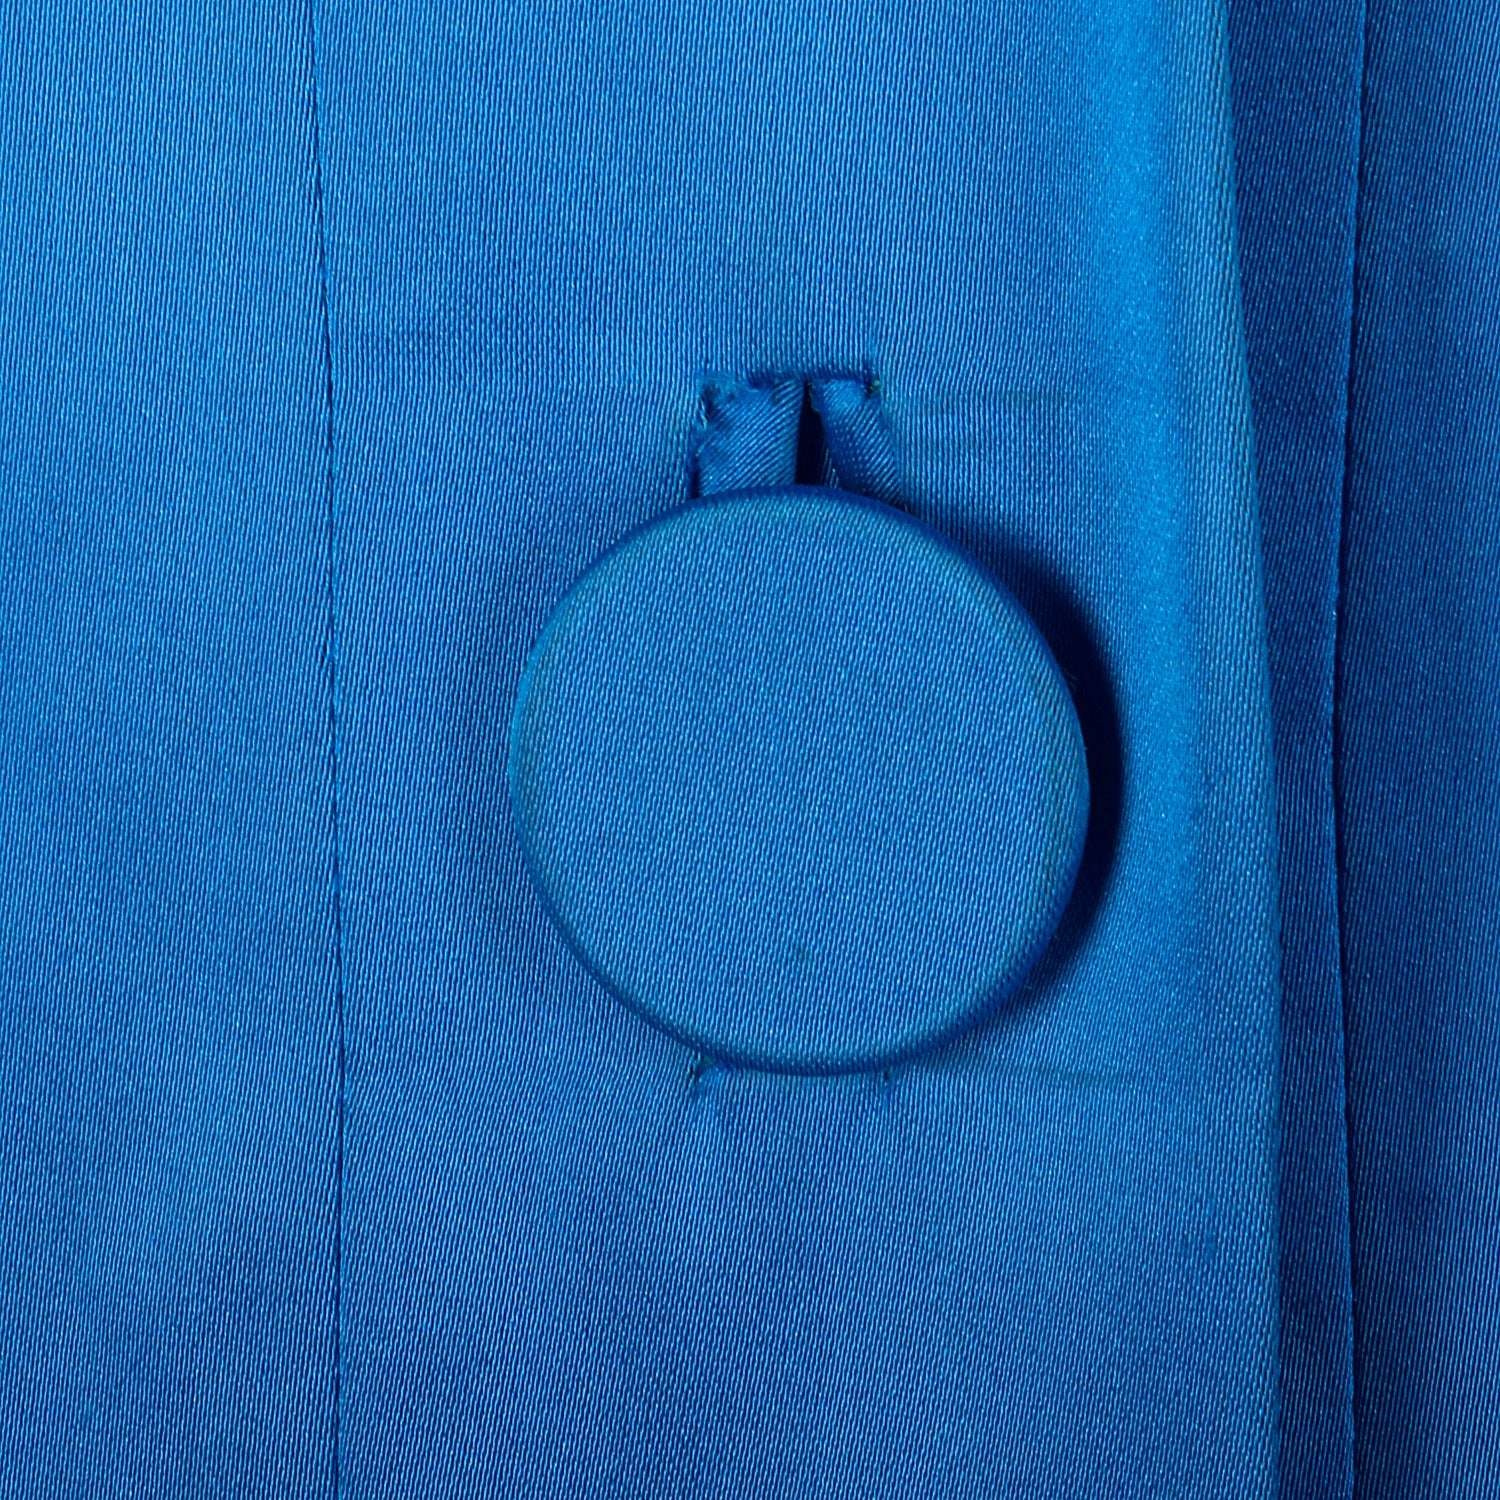 Large 1960s Blue Dress Coat